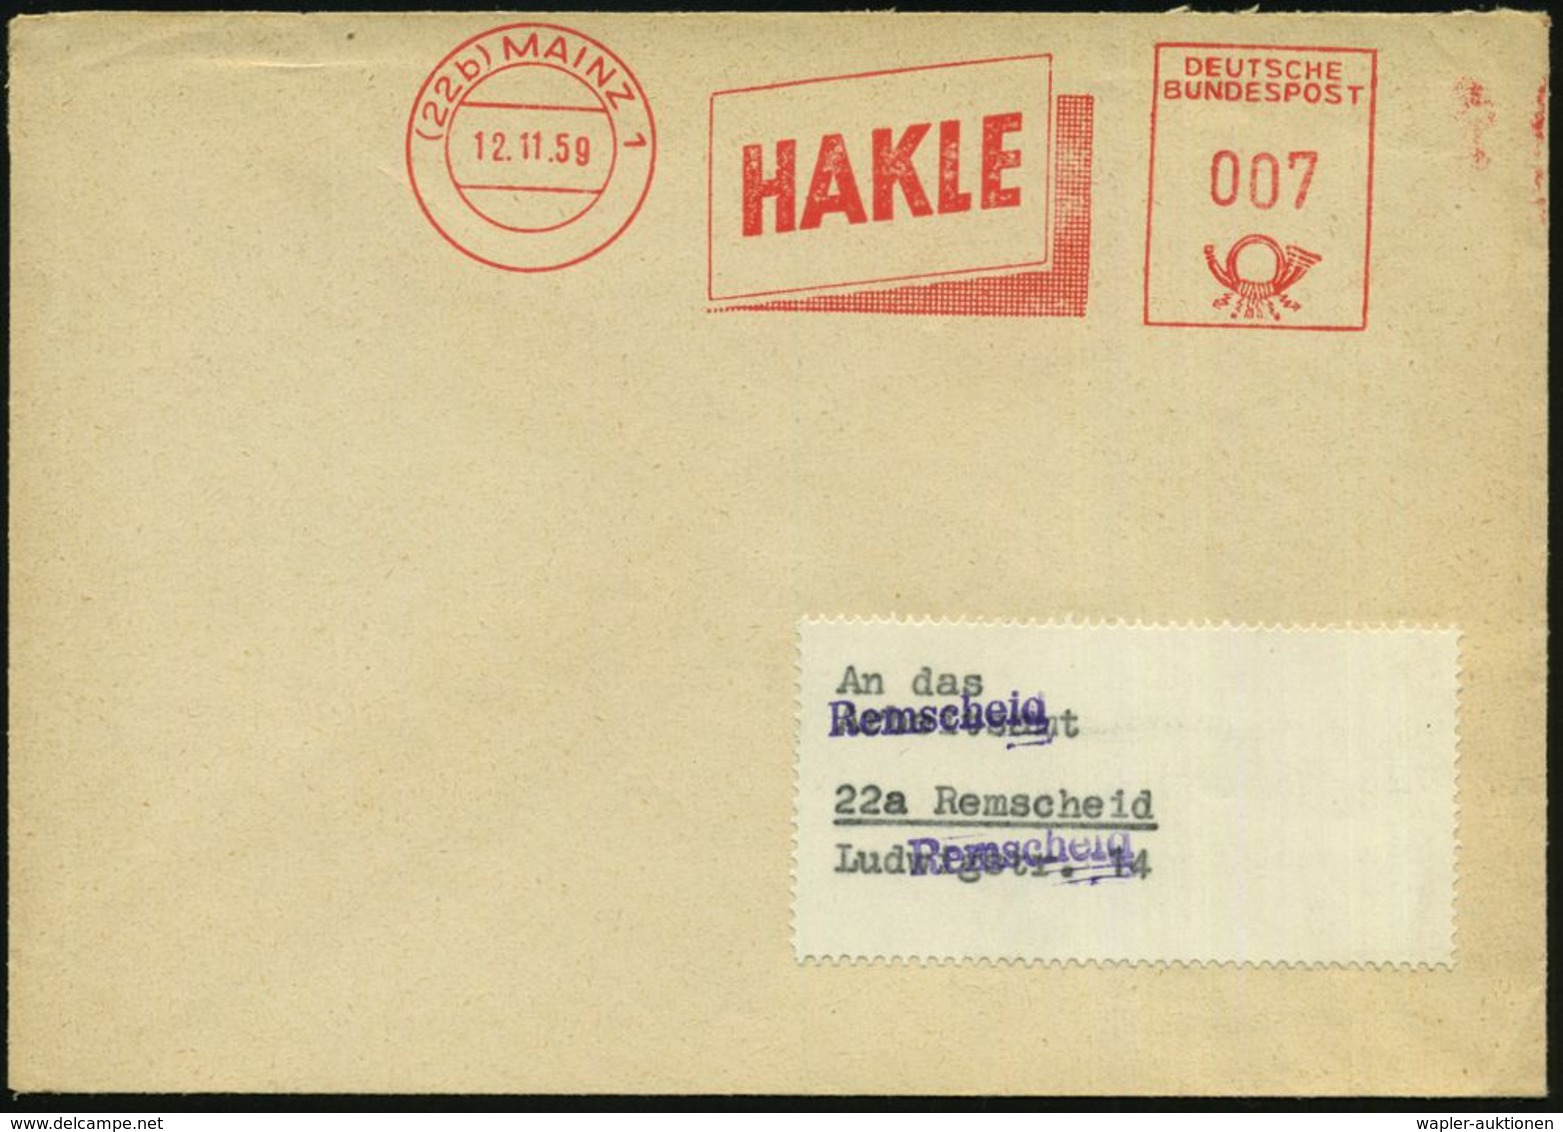 (22b) MAINZ 1/ HAKLE 1959 (12.11.) AFS = Toilettenpapier-Hersteller Etc., Klar Gest. Inl.-Bf. (Dü.E-23C) - - Pharmacie